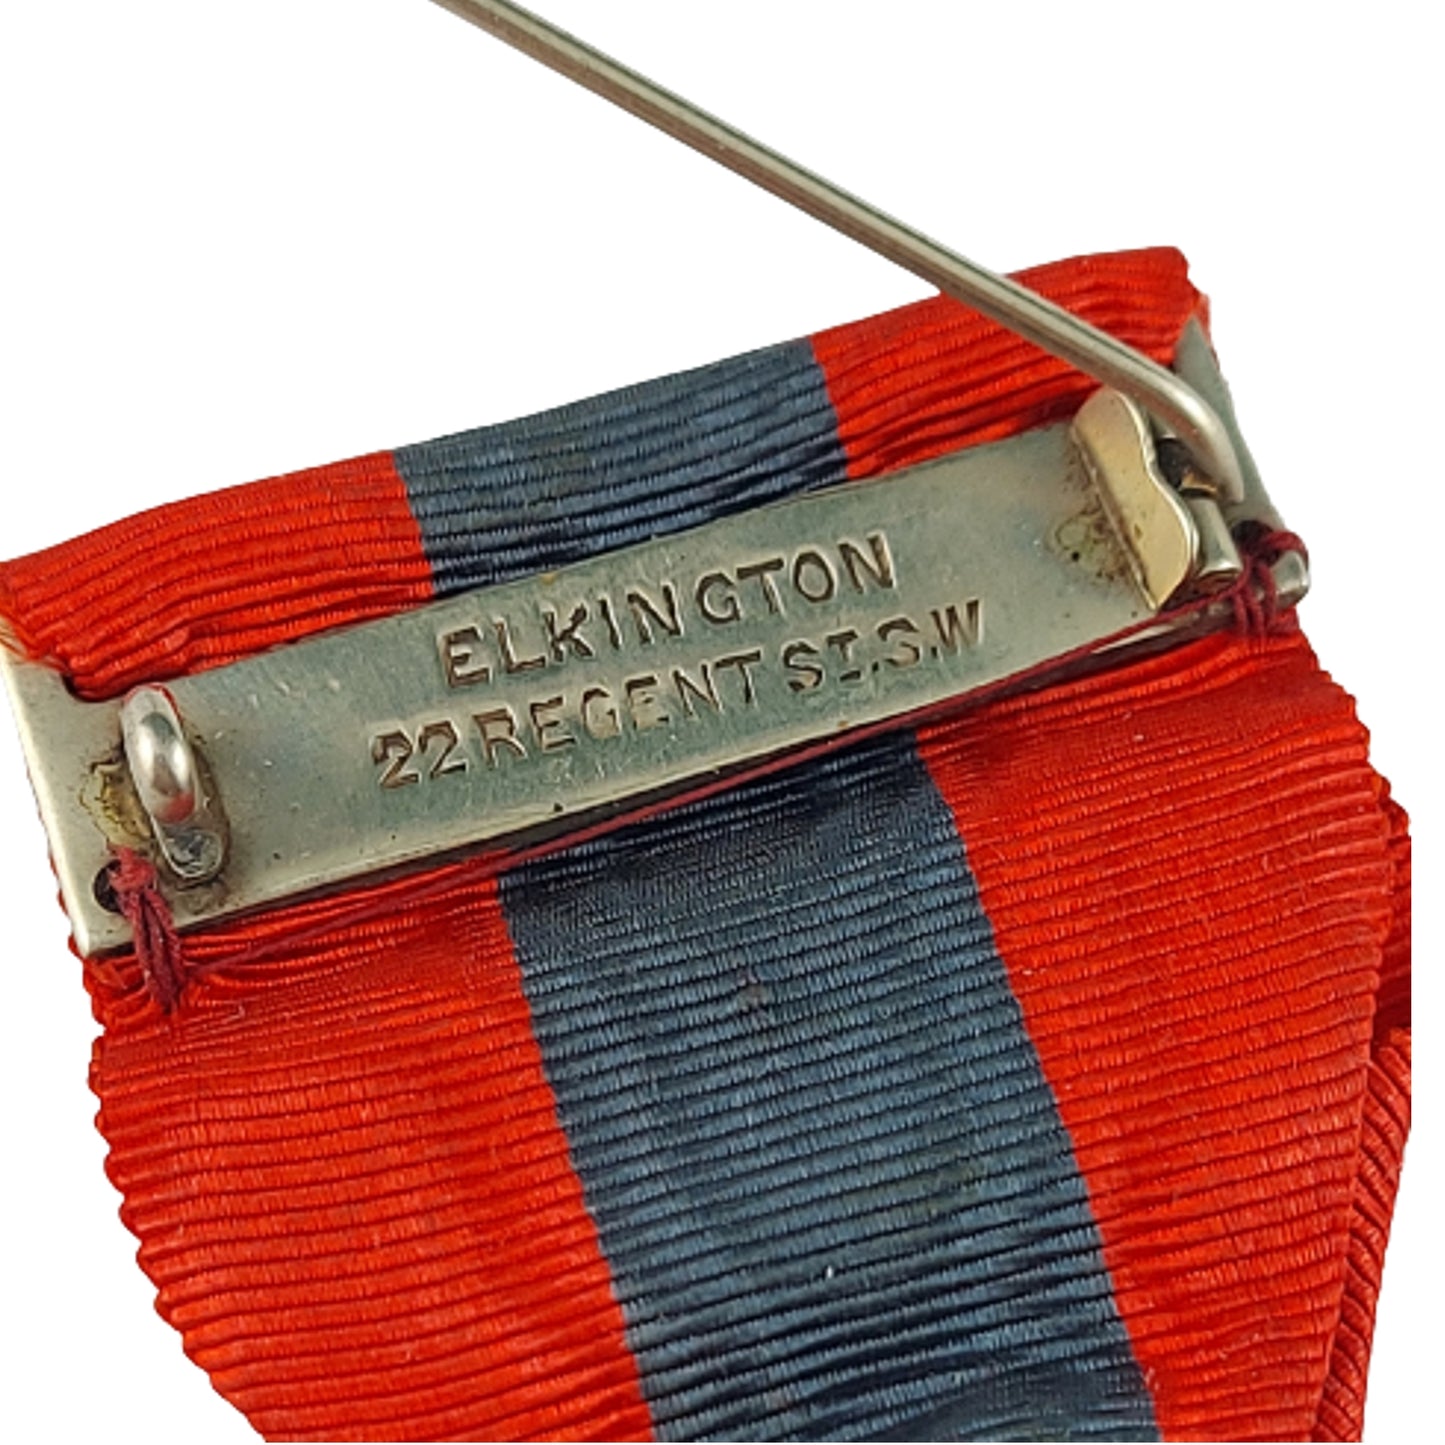 Named WW1 George V Imperial Service Medal